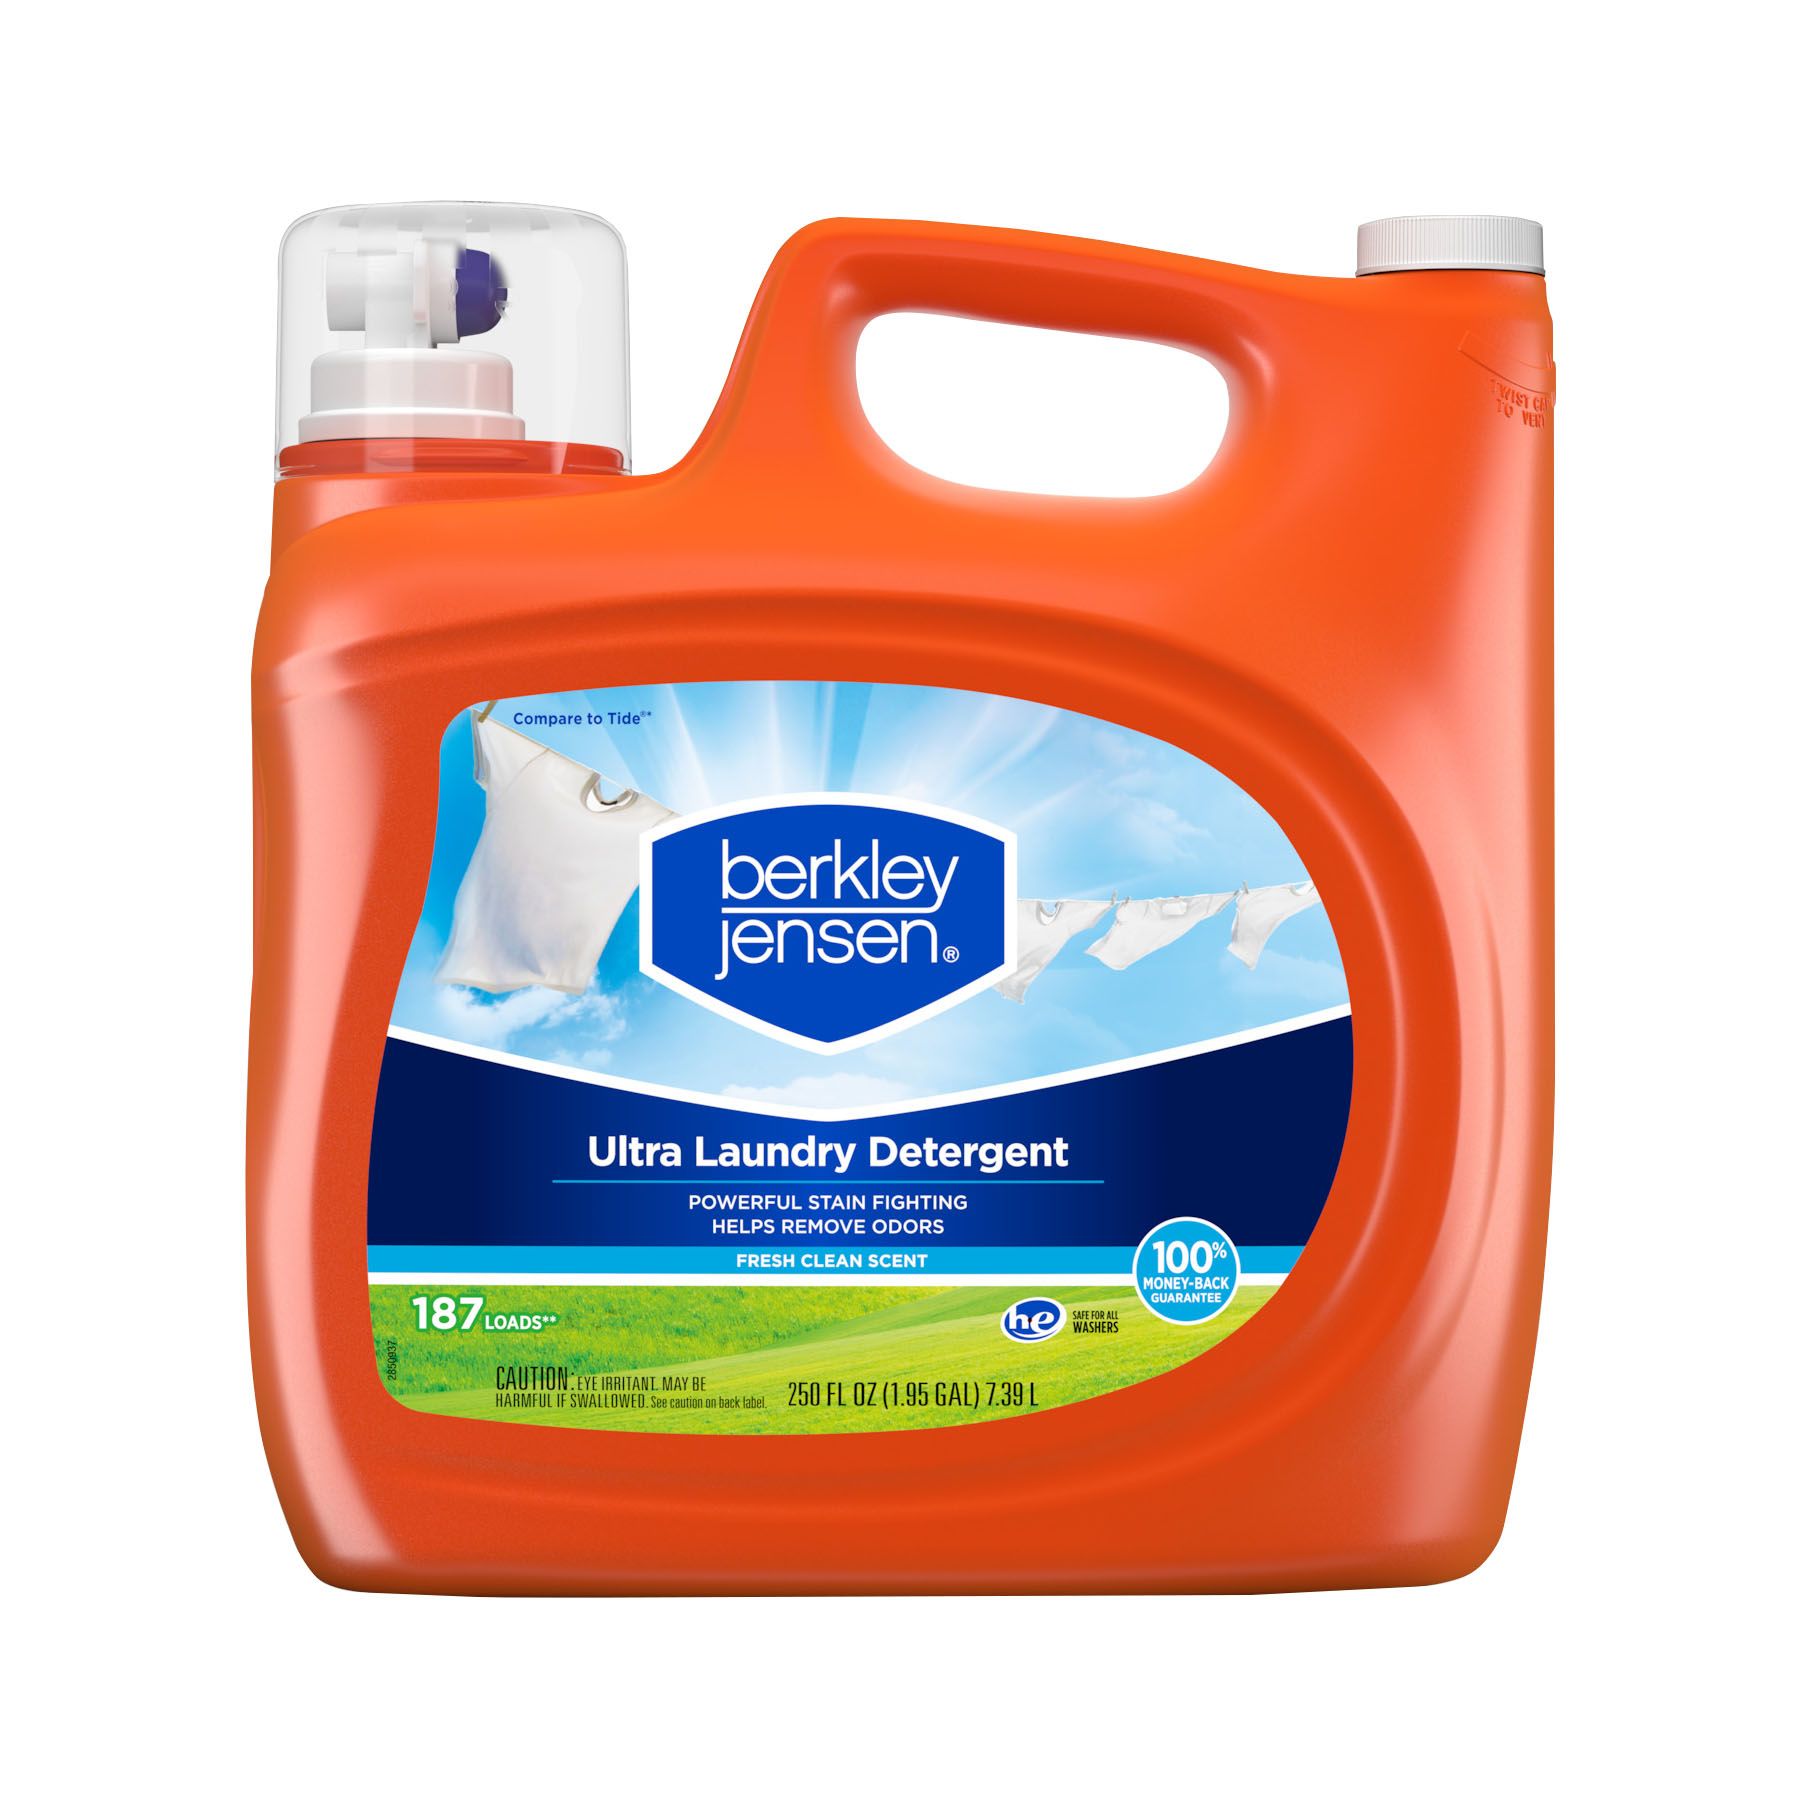 Berkley Jensen Liquid Laundry Detergent, Original Fresh Scent, 200